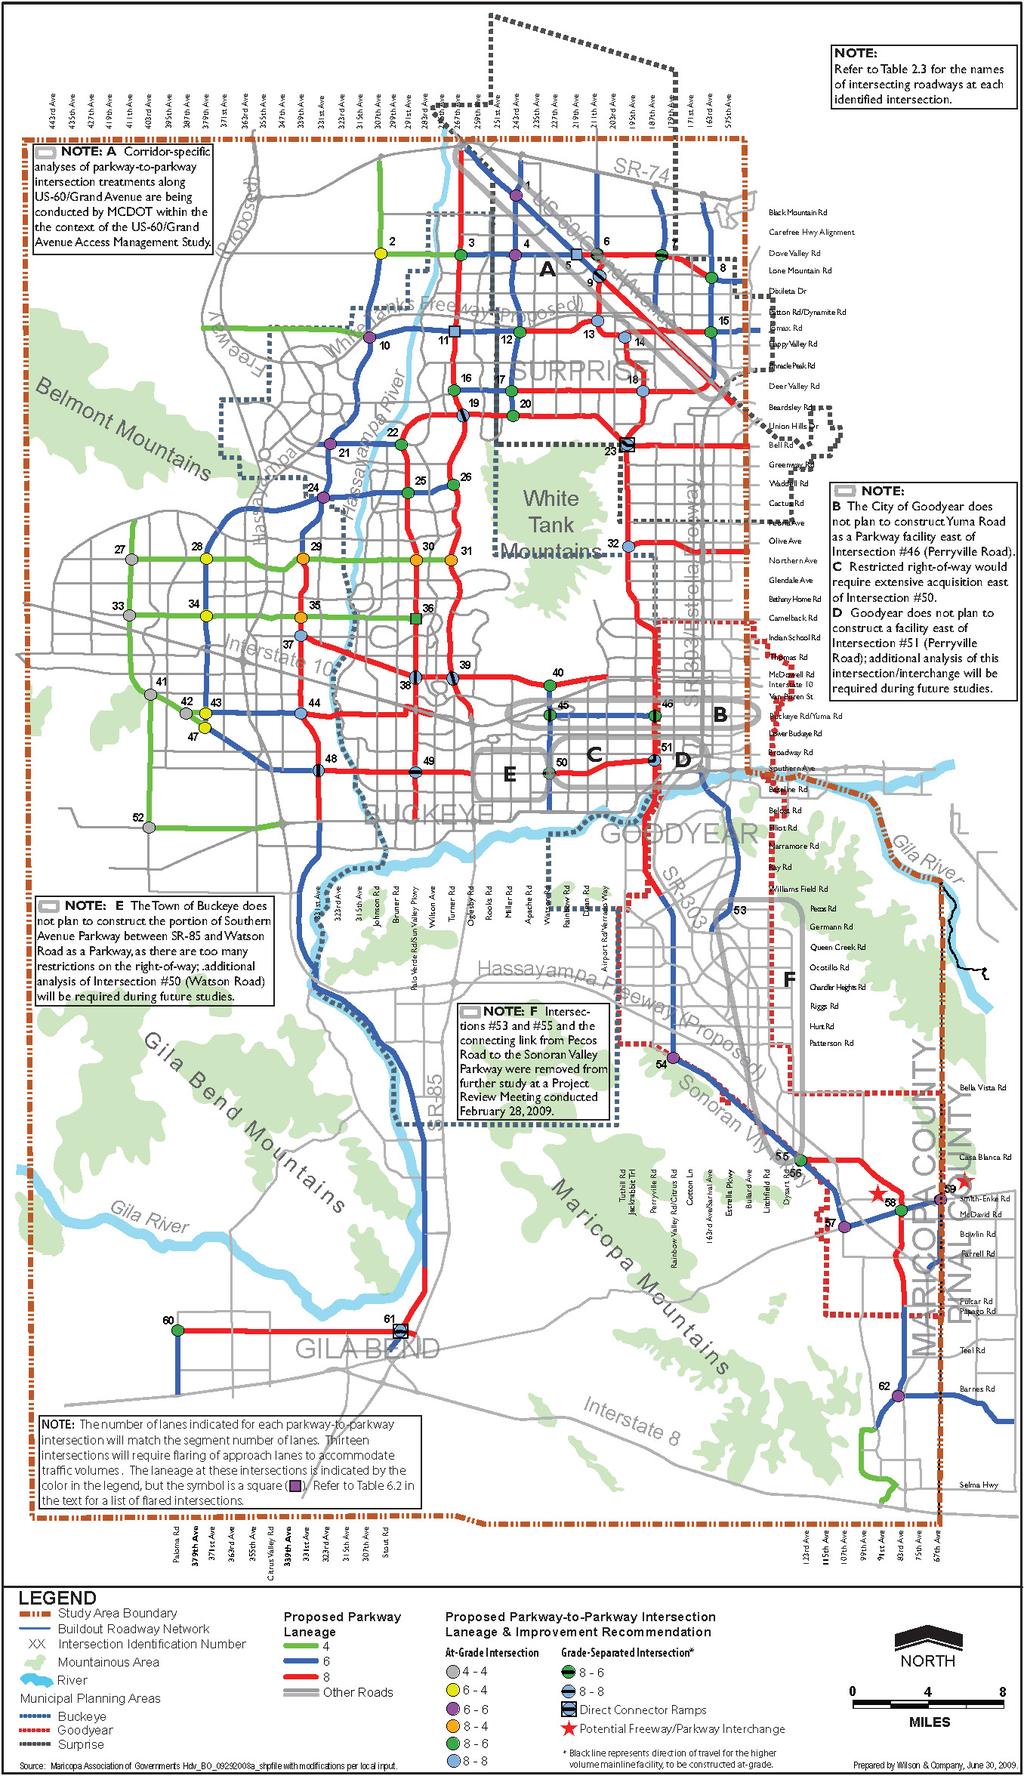 Arizona Parkway /Interchange - Operational Analysis and Design